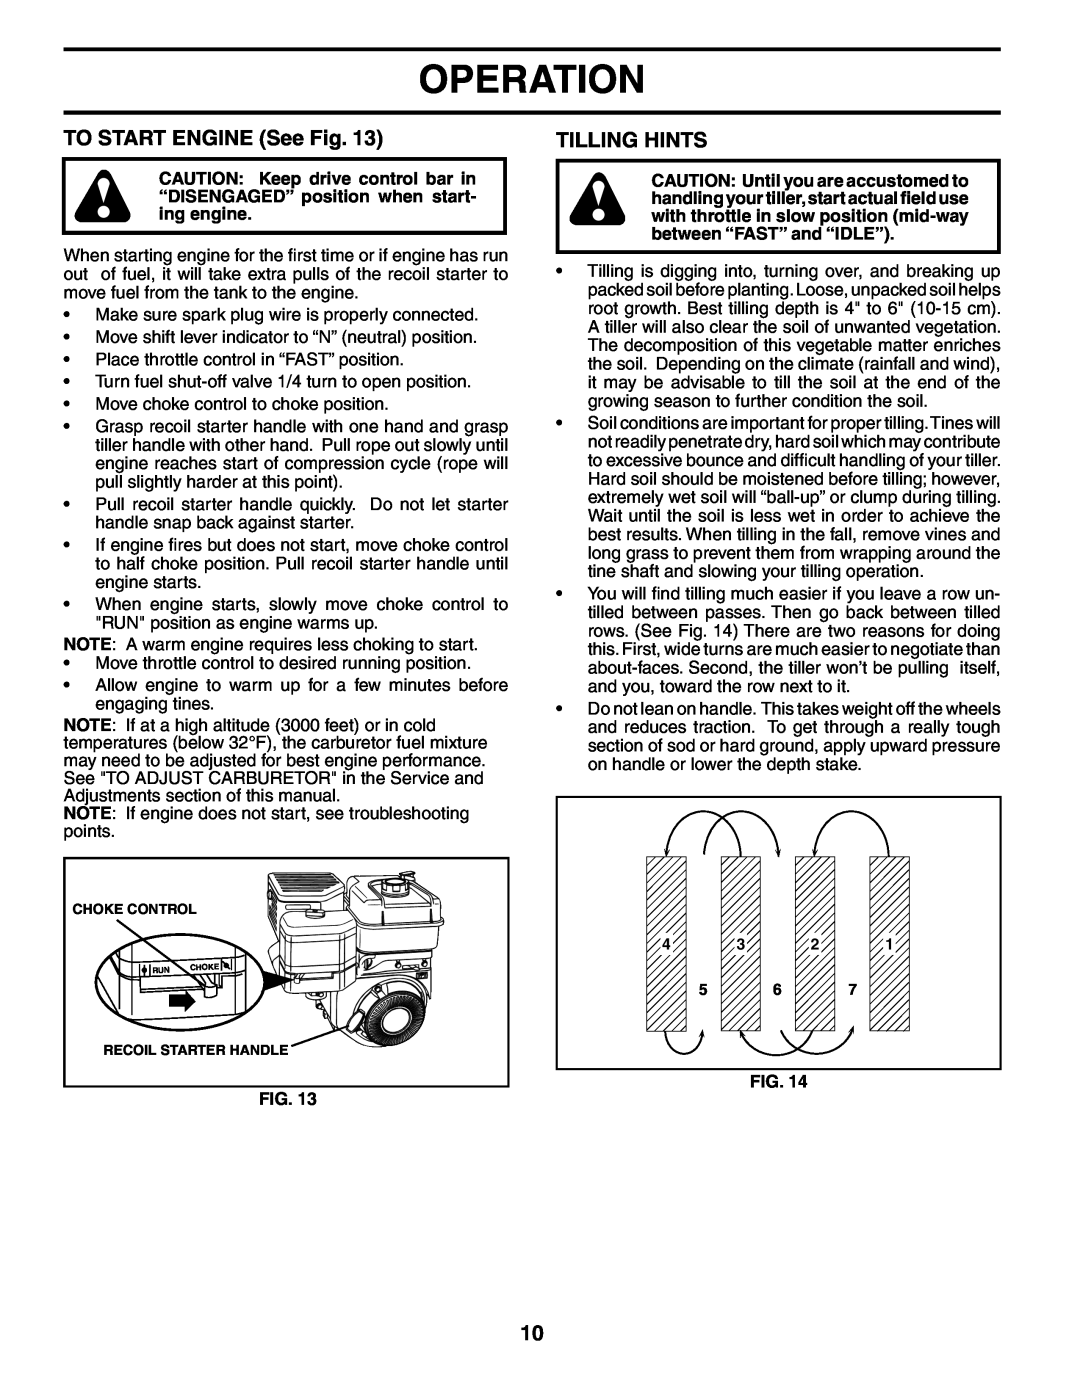 Poulan 190388 owner manual TO START ENGINE See Fig, Tilling Hints, Operation 